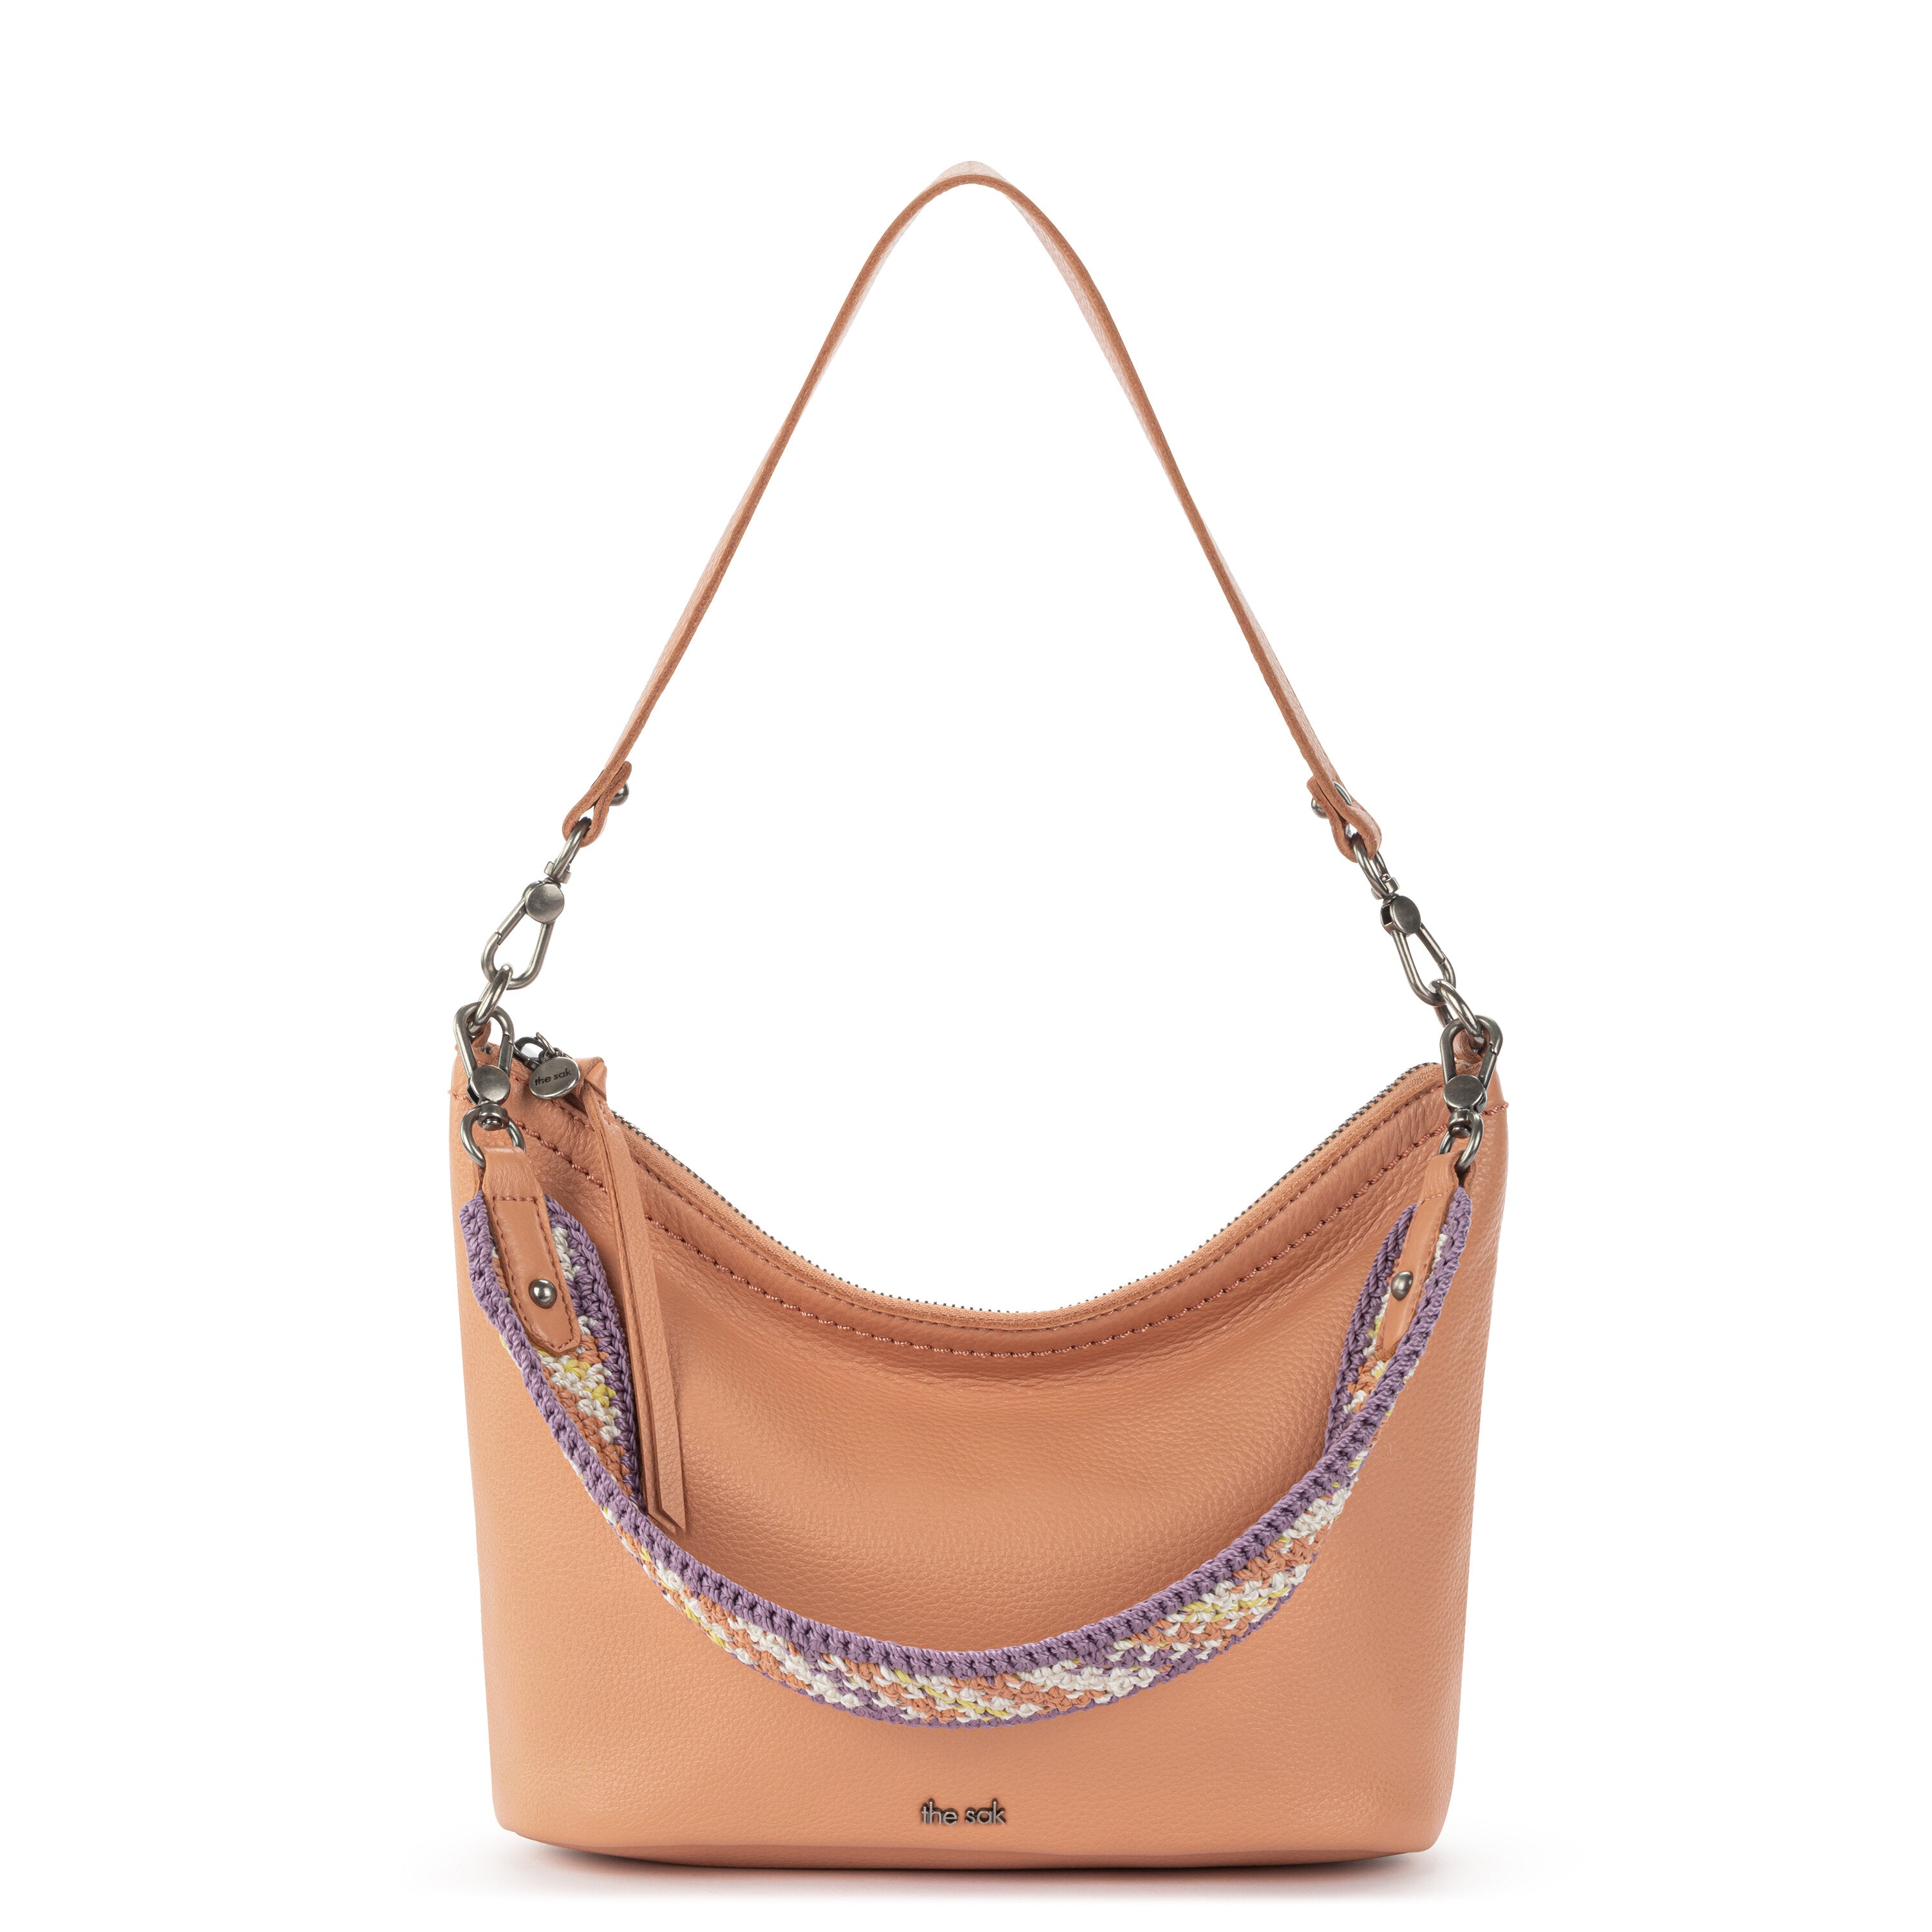 The Sak Handbags On Sale Up To 90% Off Retail | ThredUp